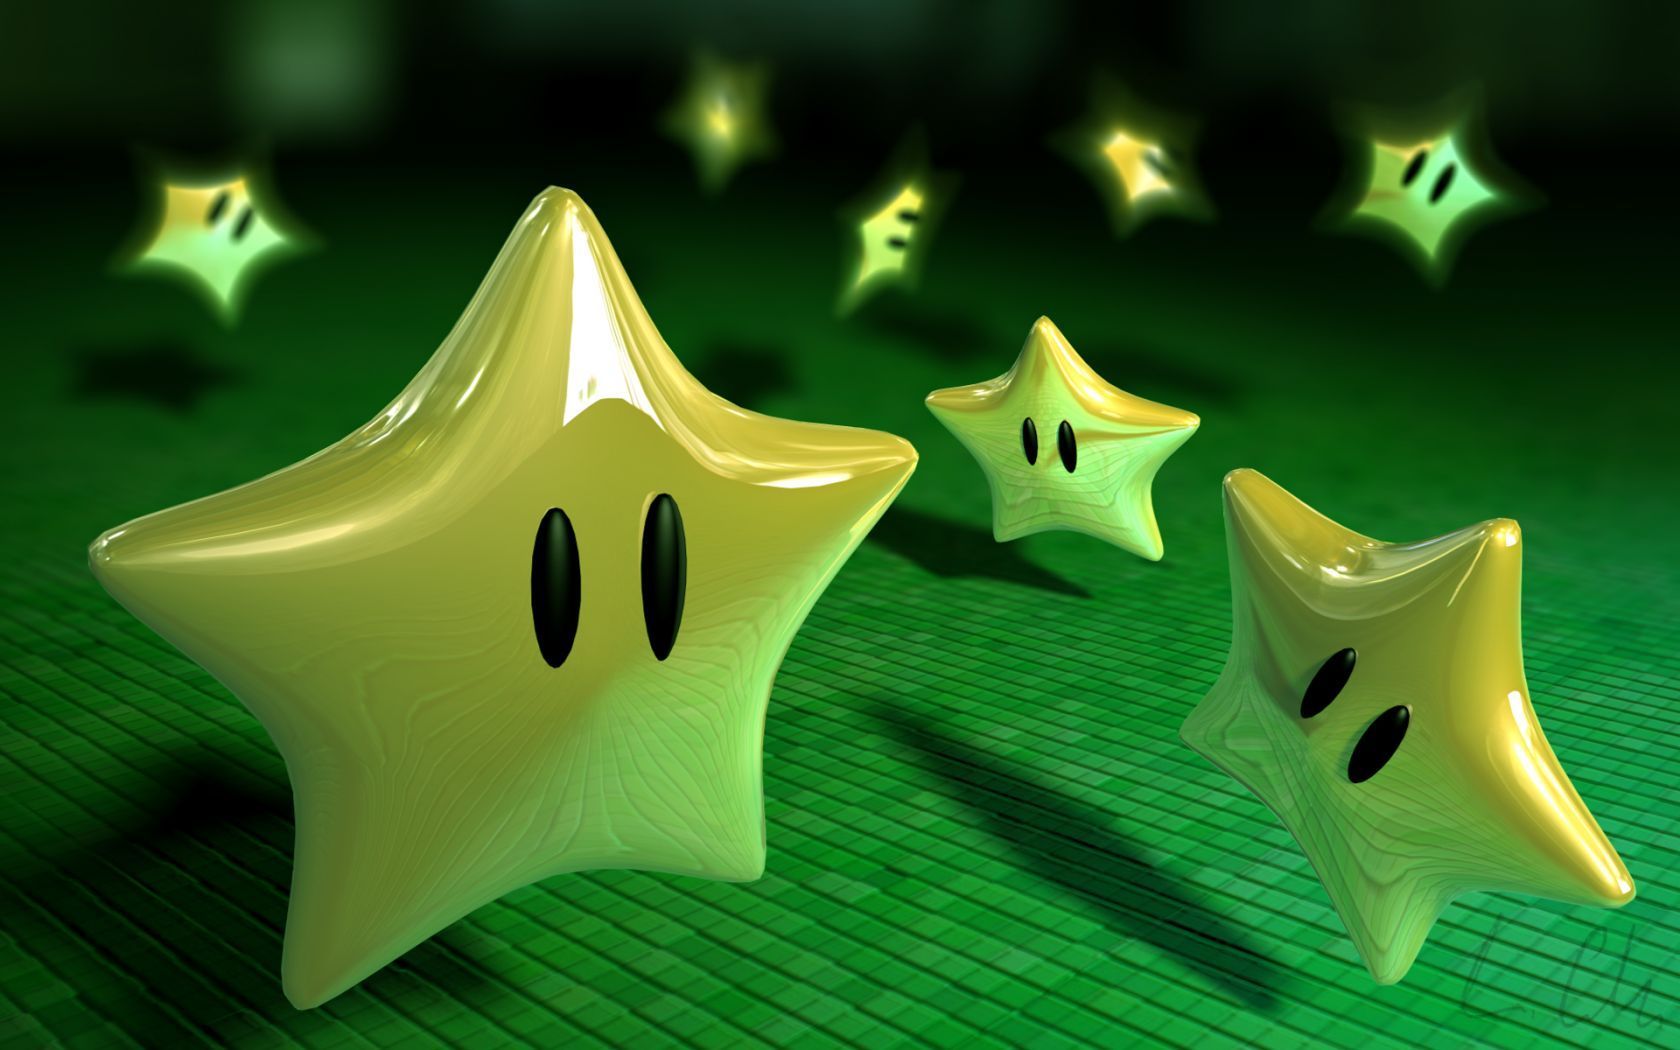 Super Mario Stars 3D Wallpaper Stars in HD Quality Free Download ...